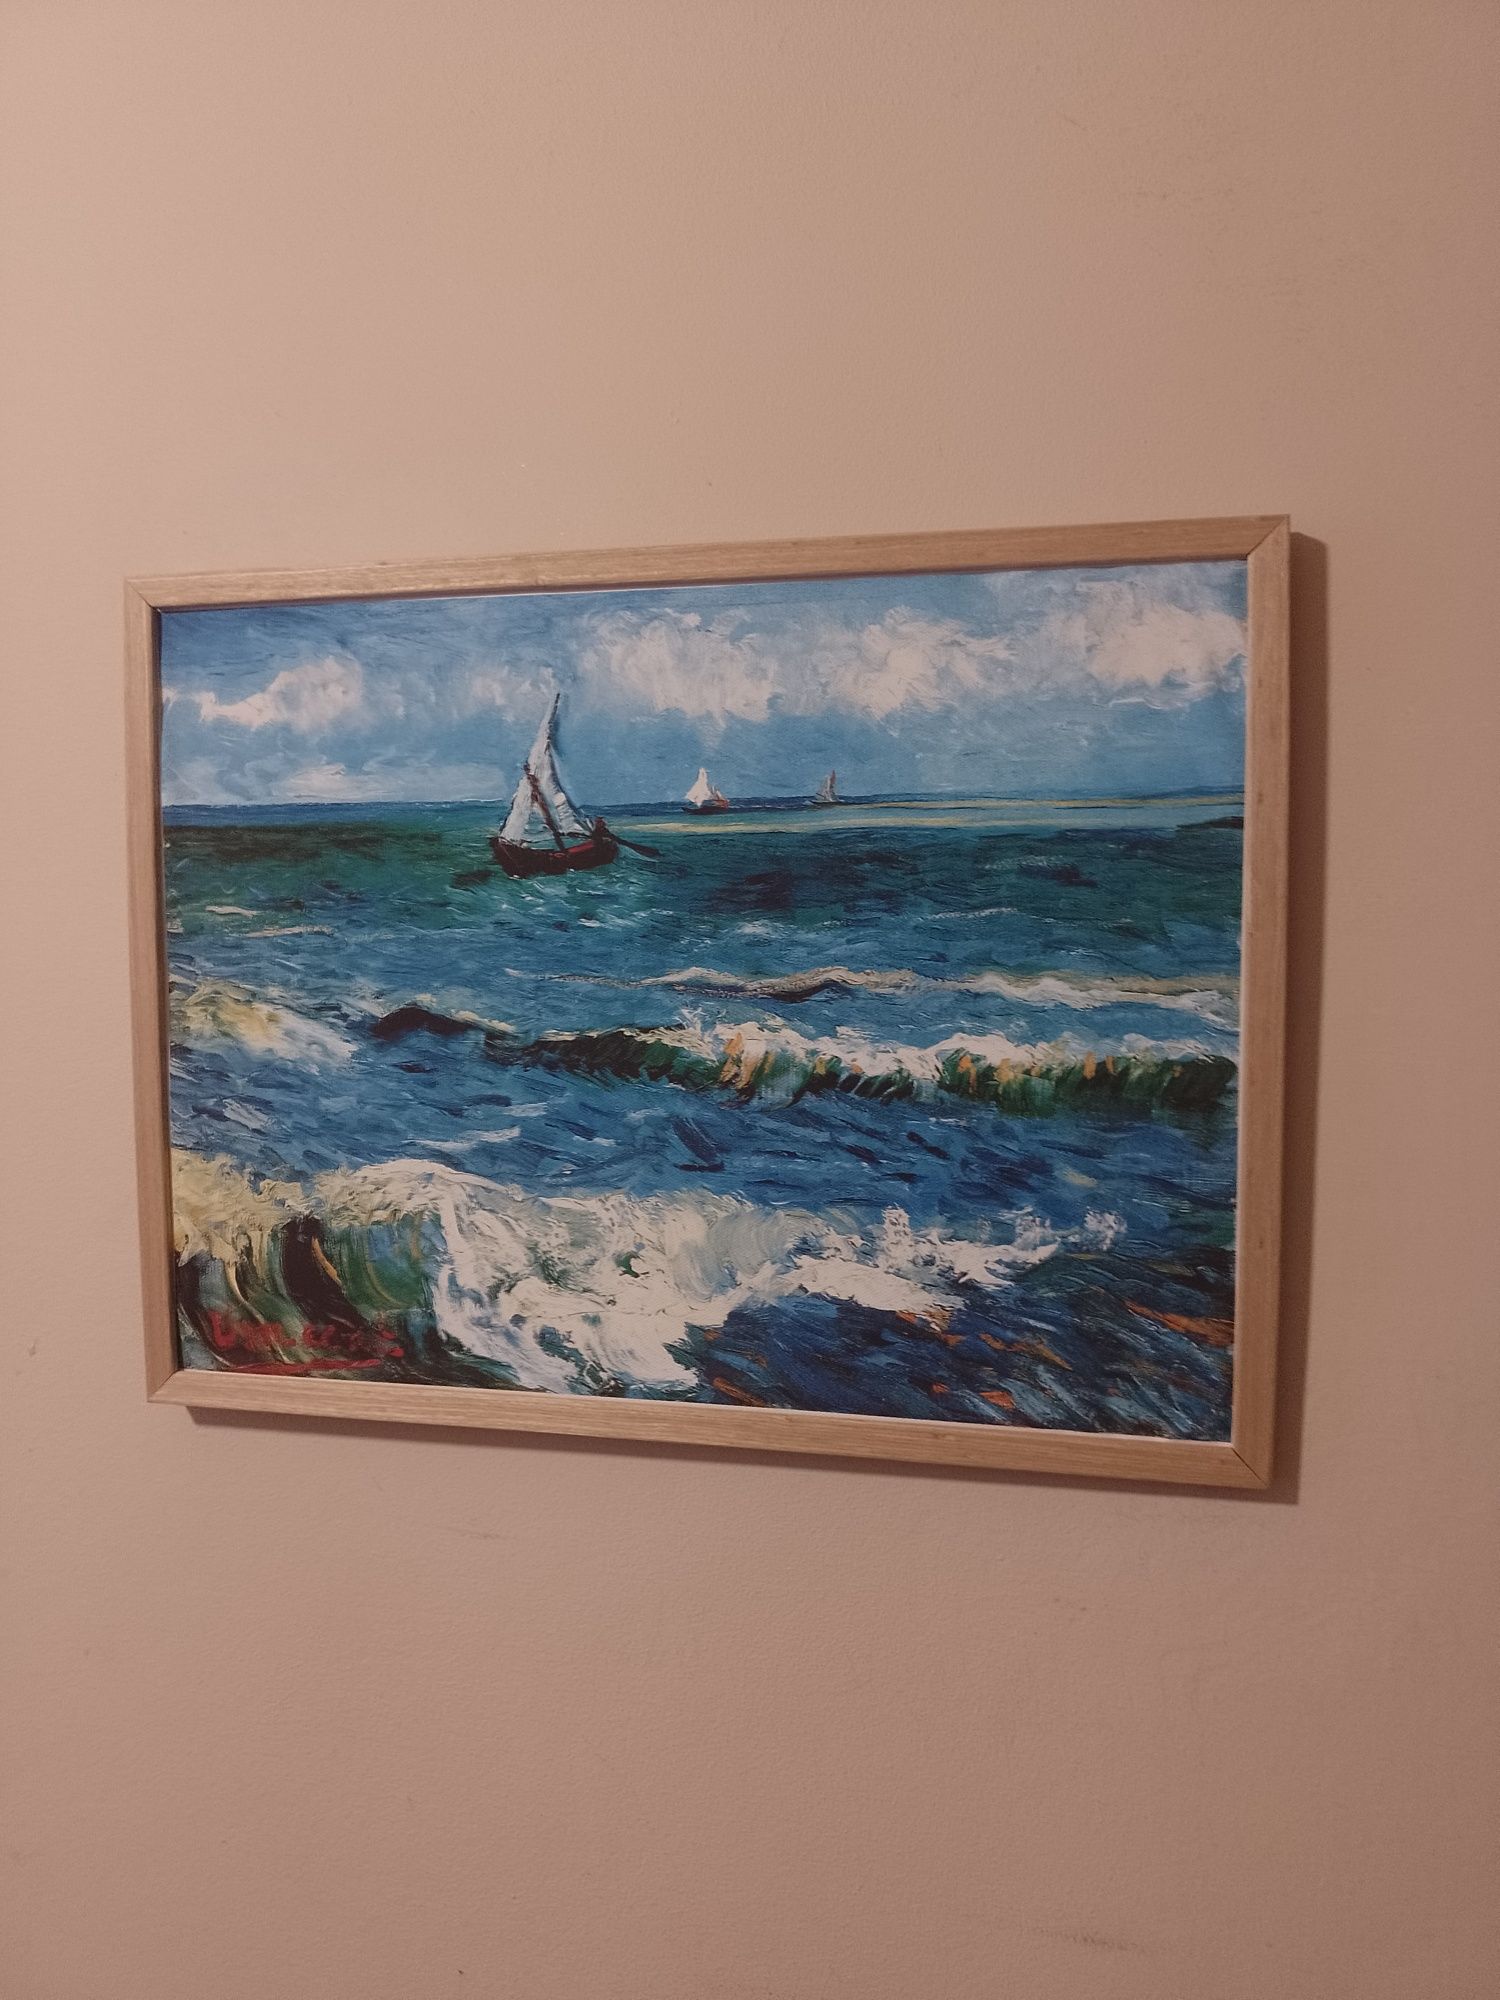 Obraz Pejzaż morski  reprodukcja Van Gogh na Płótnie w Ramce 40x30